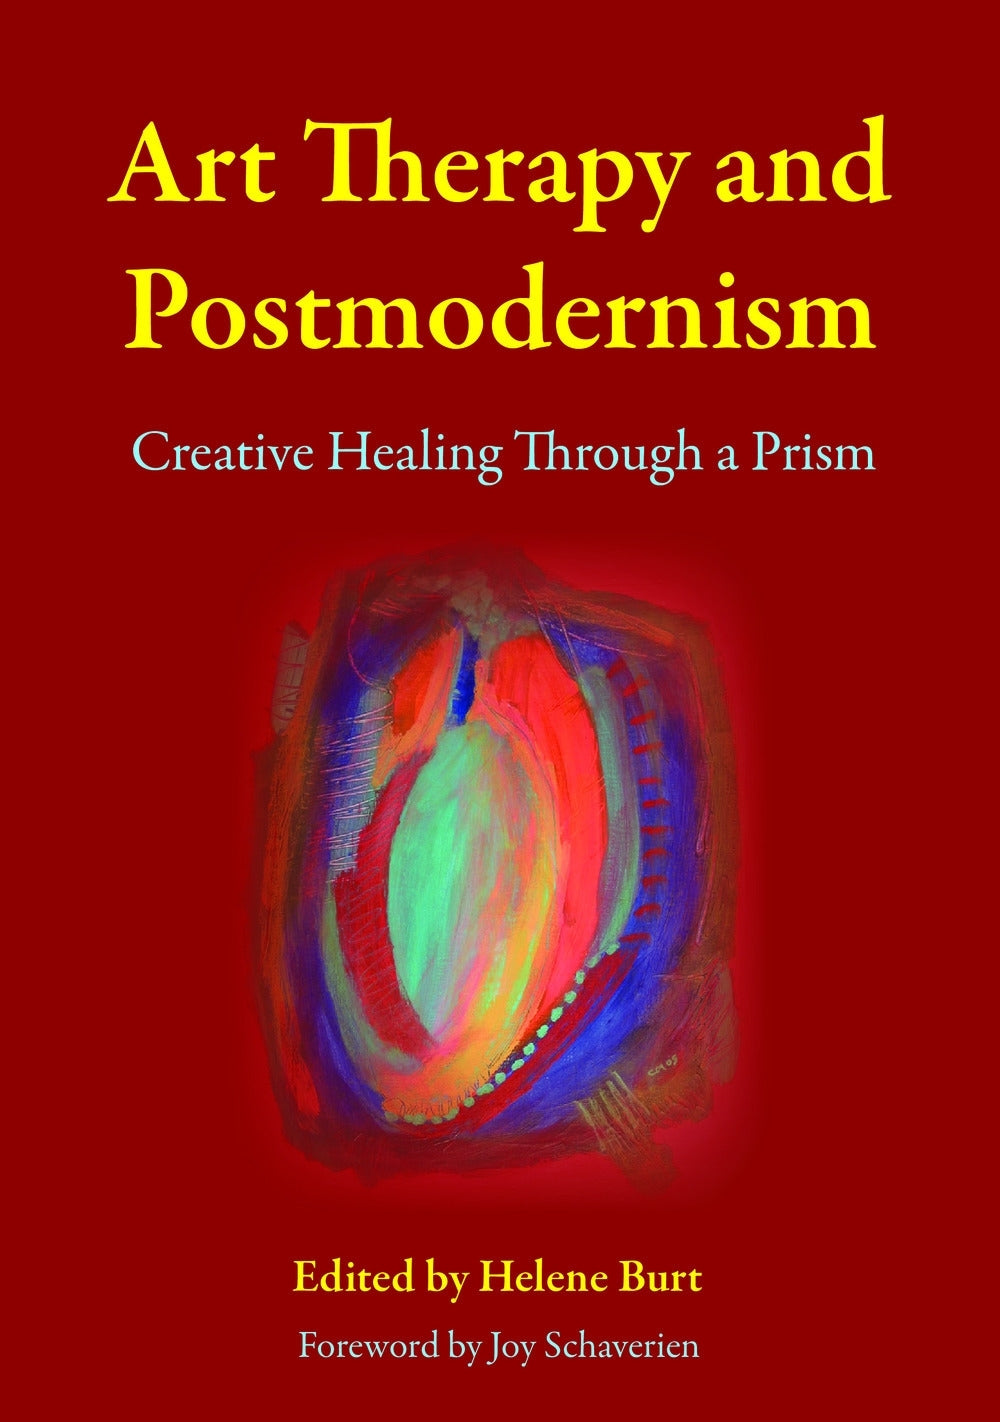 Art Therapy and Postmodernism by Helene Burt, Joy Schaverien